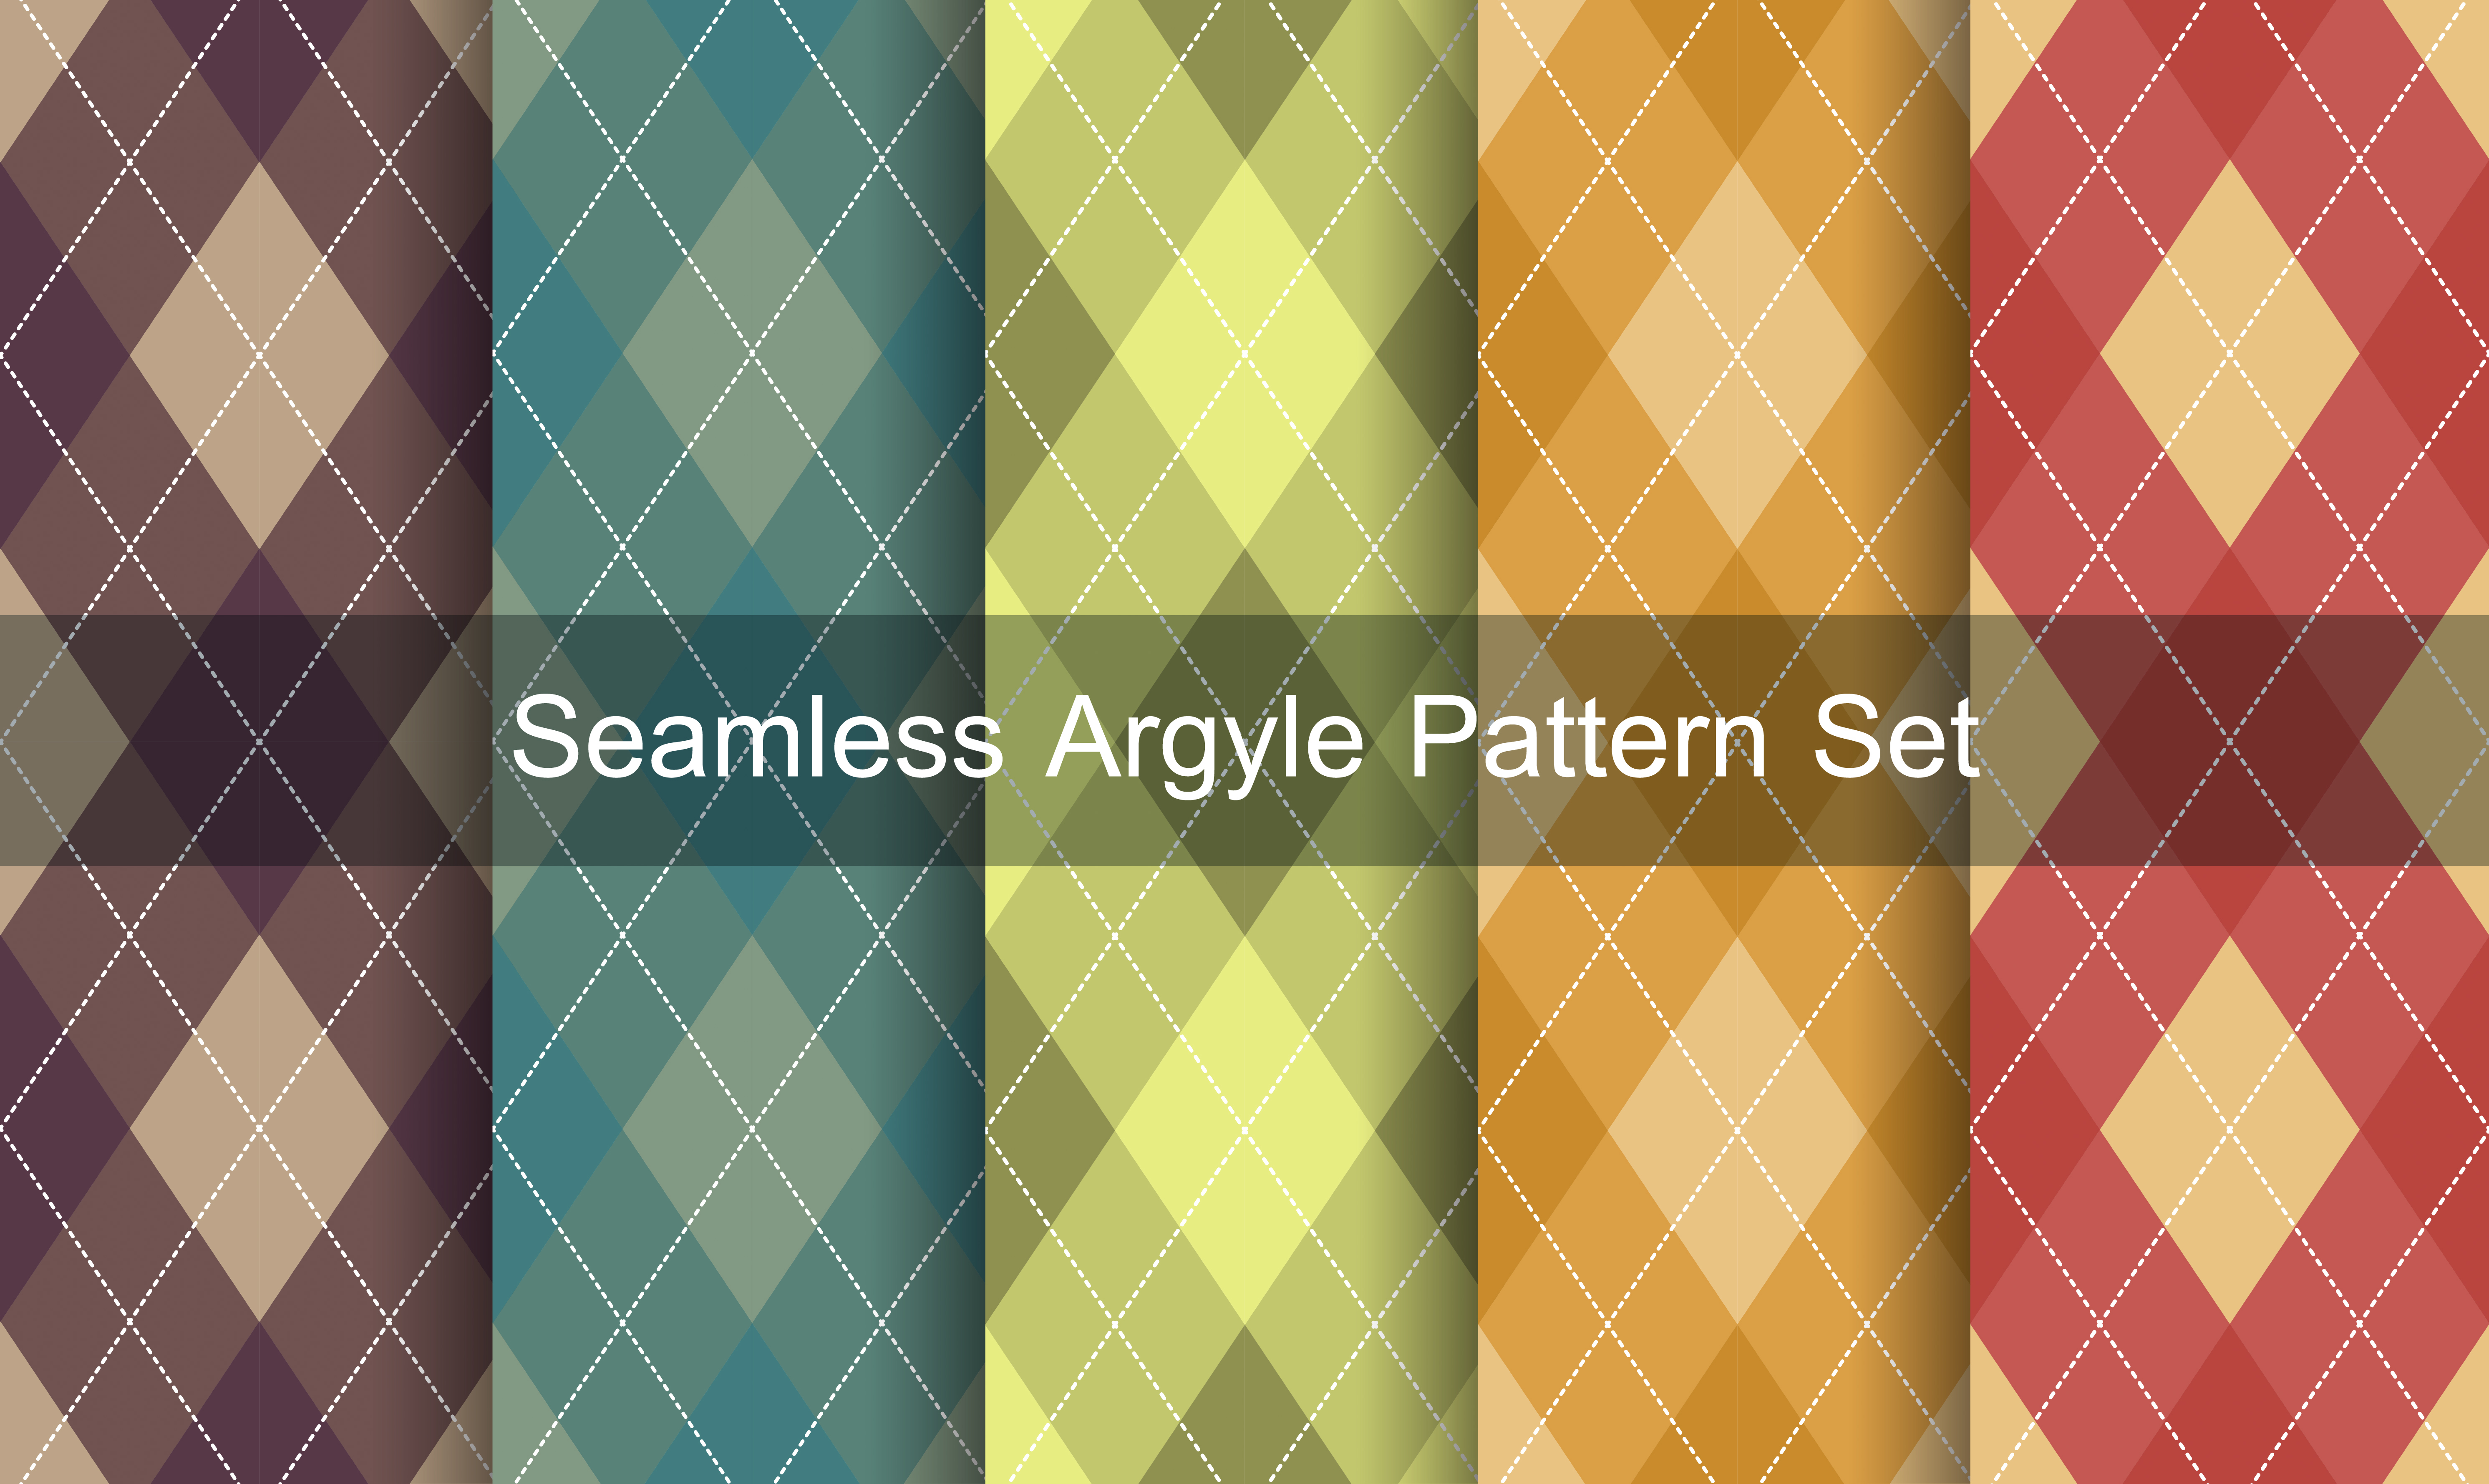 Seamless argyle pattern set. 700967 - Download Free Vectors, Clipart